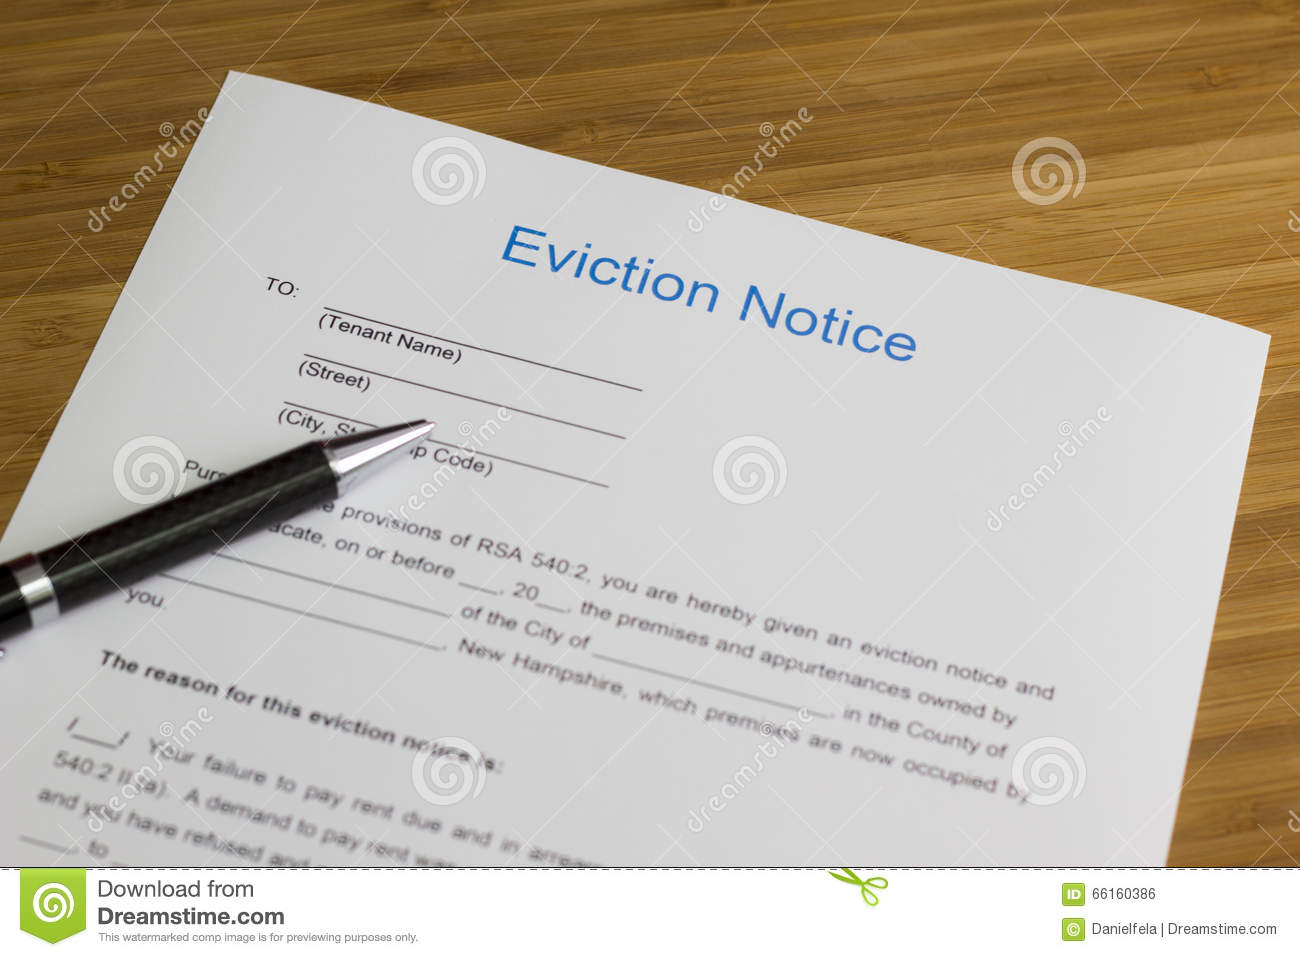 Eviction Notice Stock Photo   Image  66160386